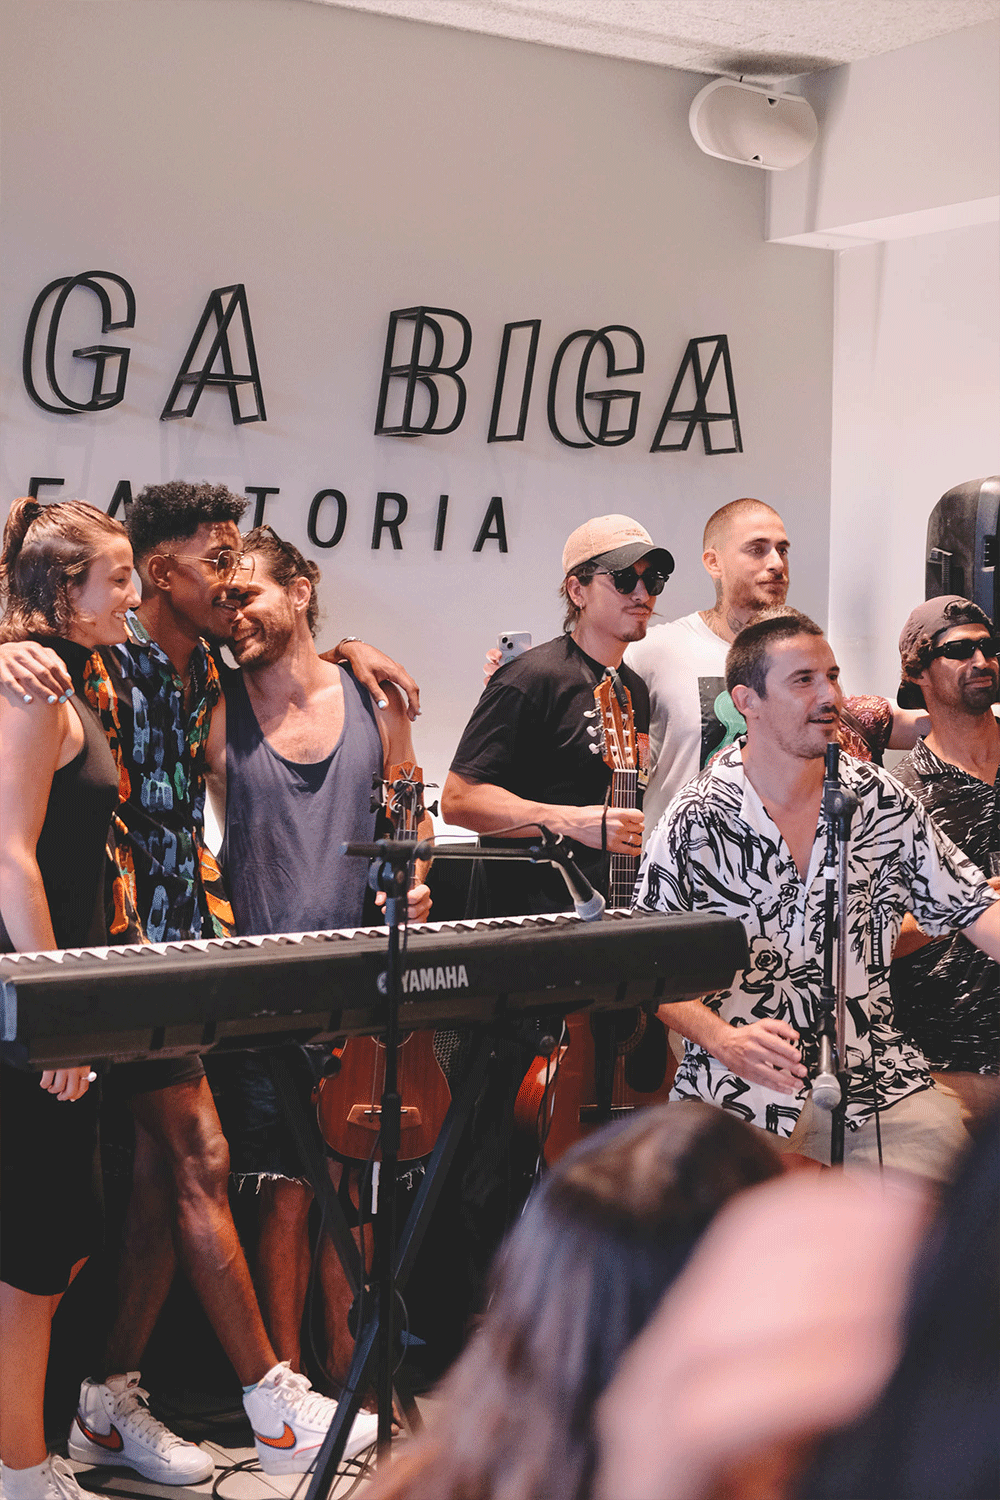 Música en directo en Baga Biga Faktoria